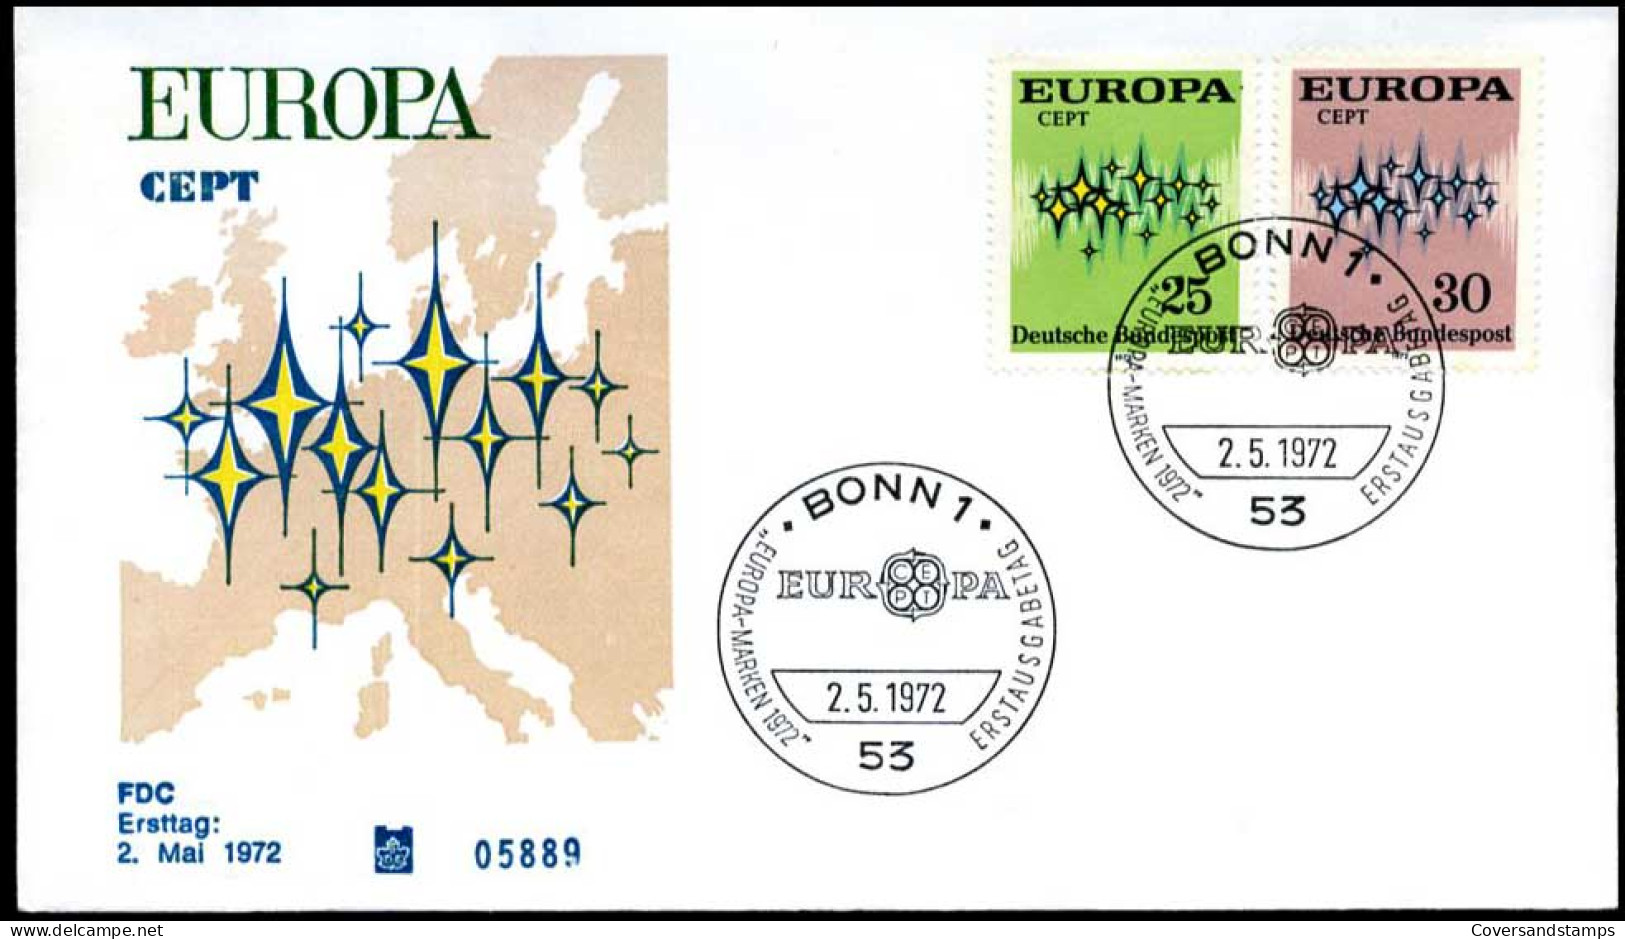  Bundespost - FDC - Europa CEPT 1972 - 1972